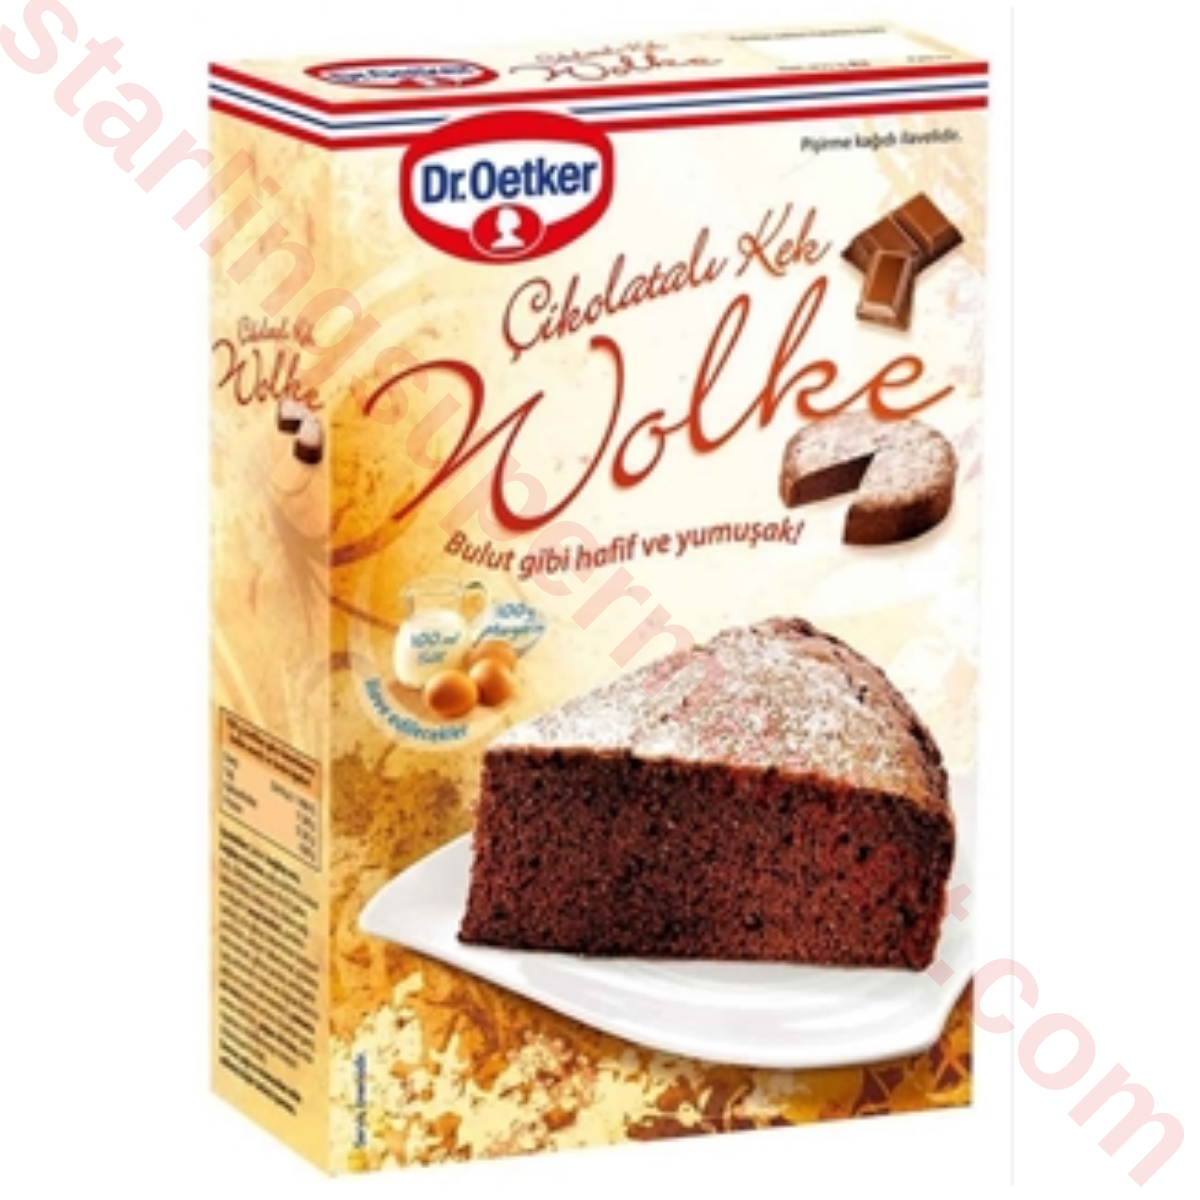 DR OETKER CAKE WOLKE CHOCOLATE 455 G